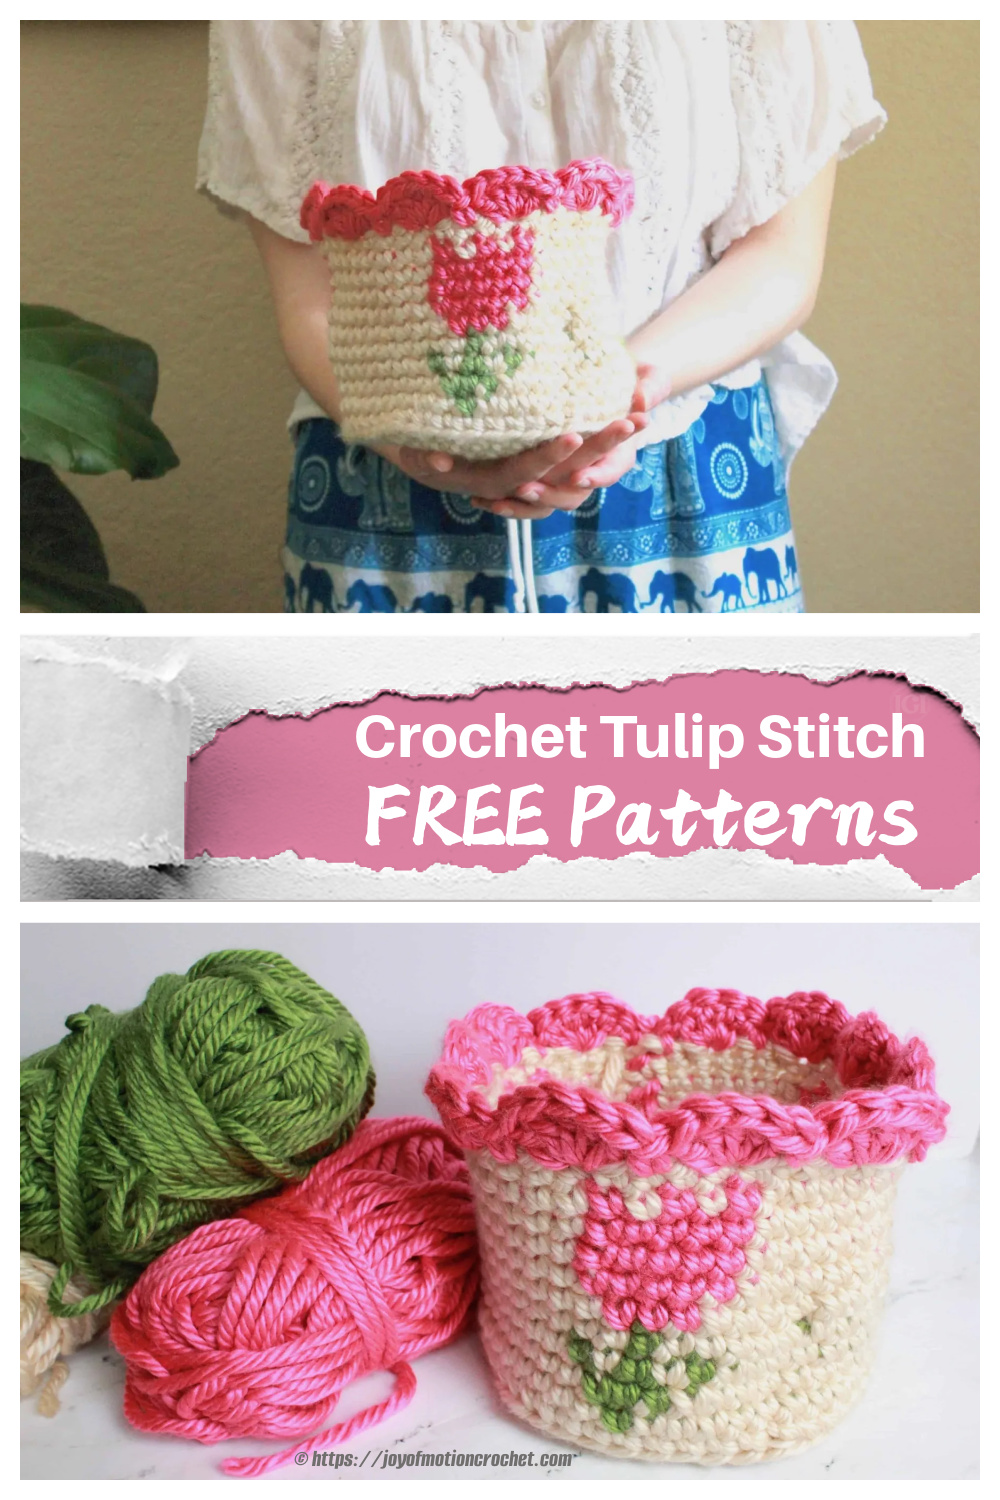 Crochet Tulip Stitch FREE Patterns